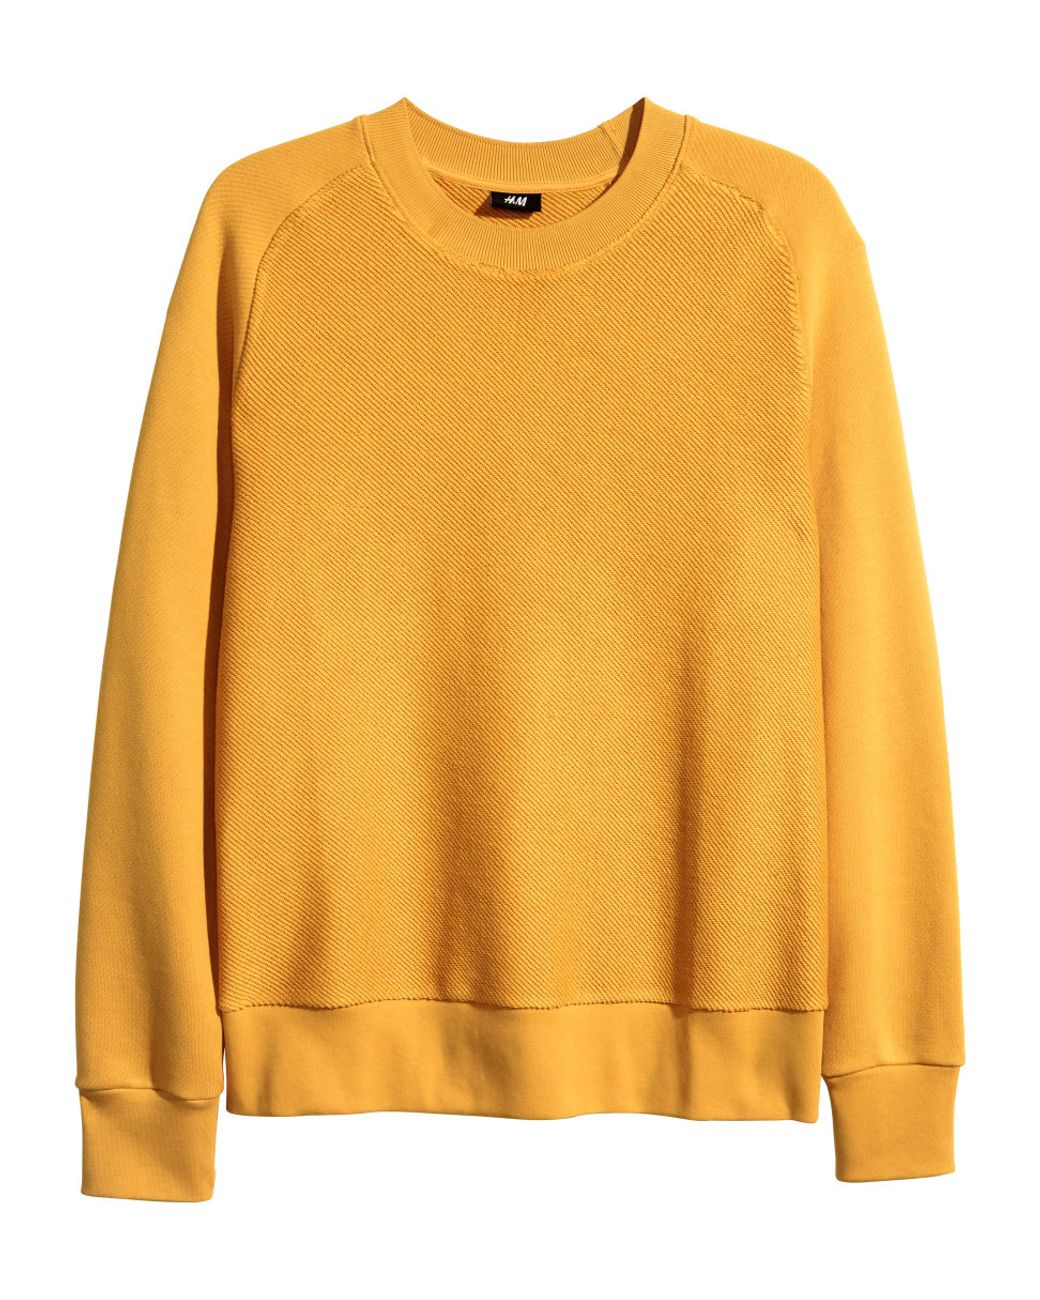 H&M Sweatshirt in Mustard Yellow (Yellow) for Men | Lyst